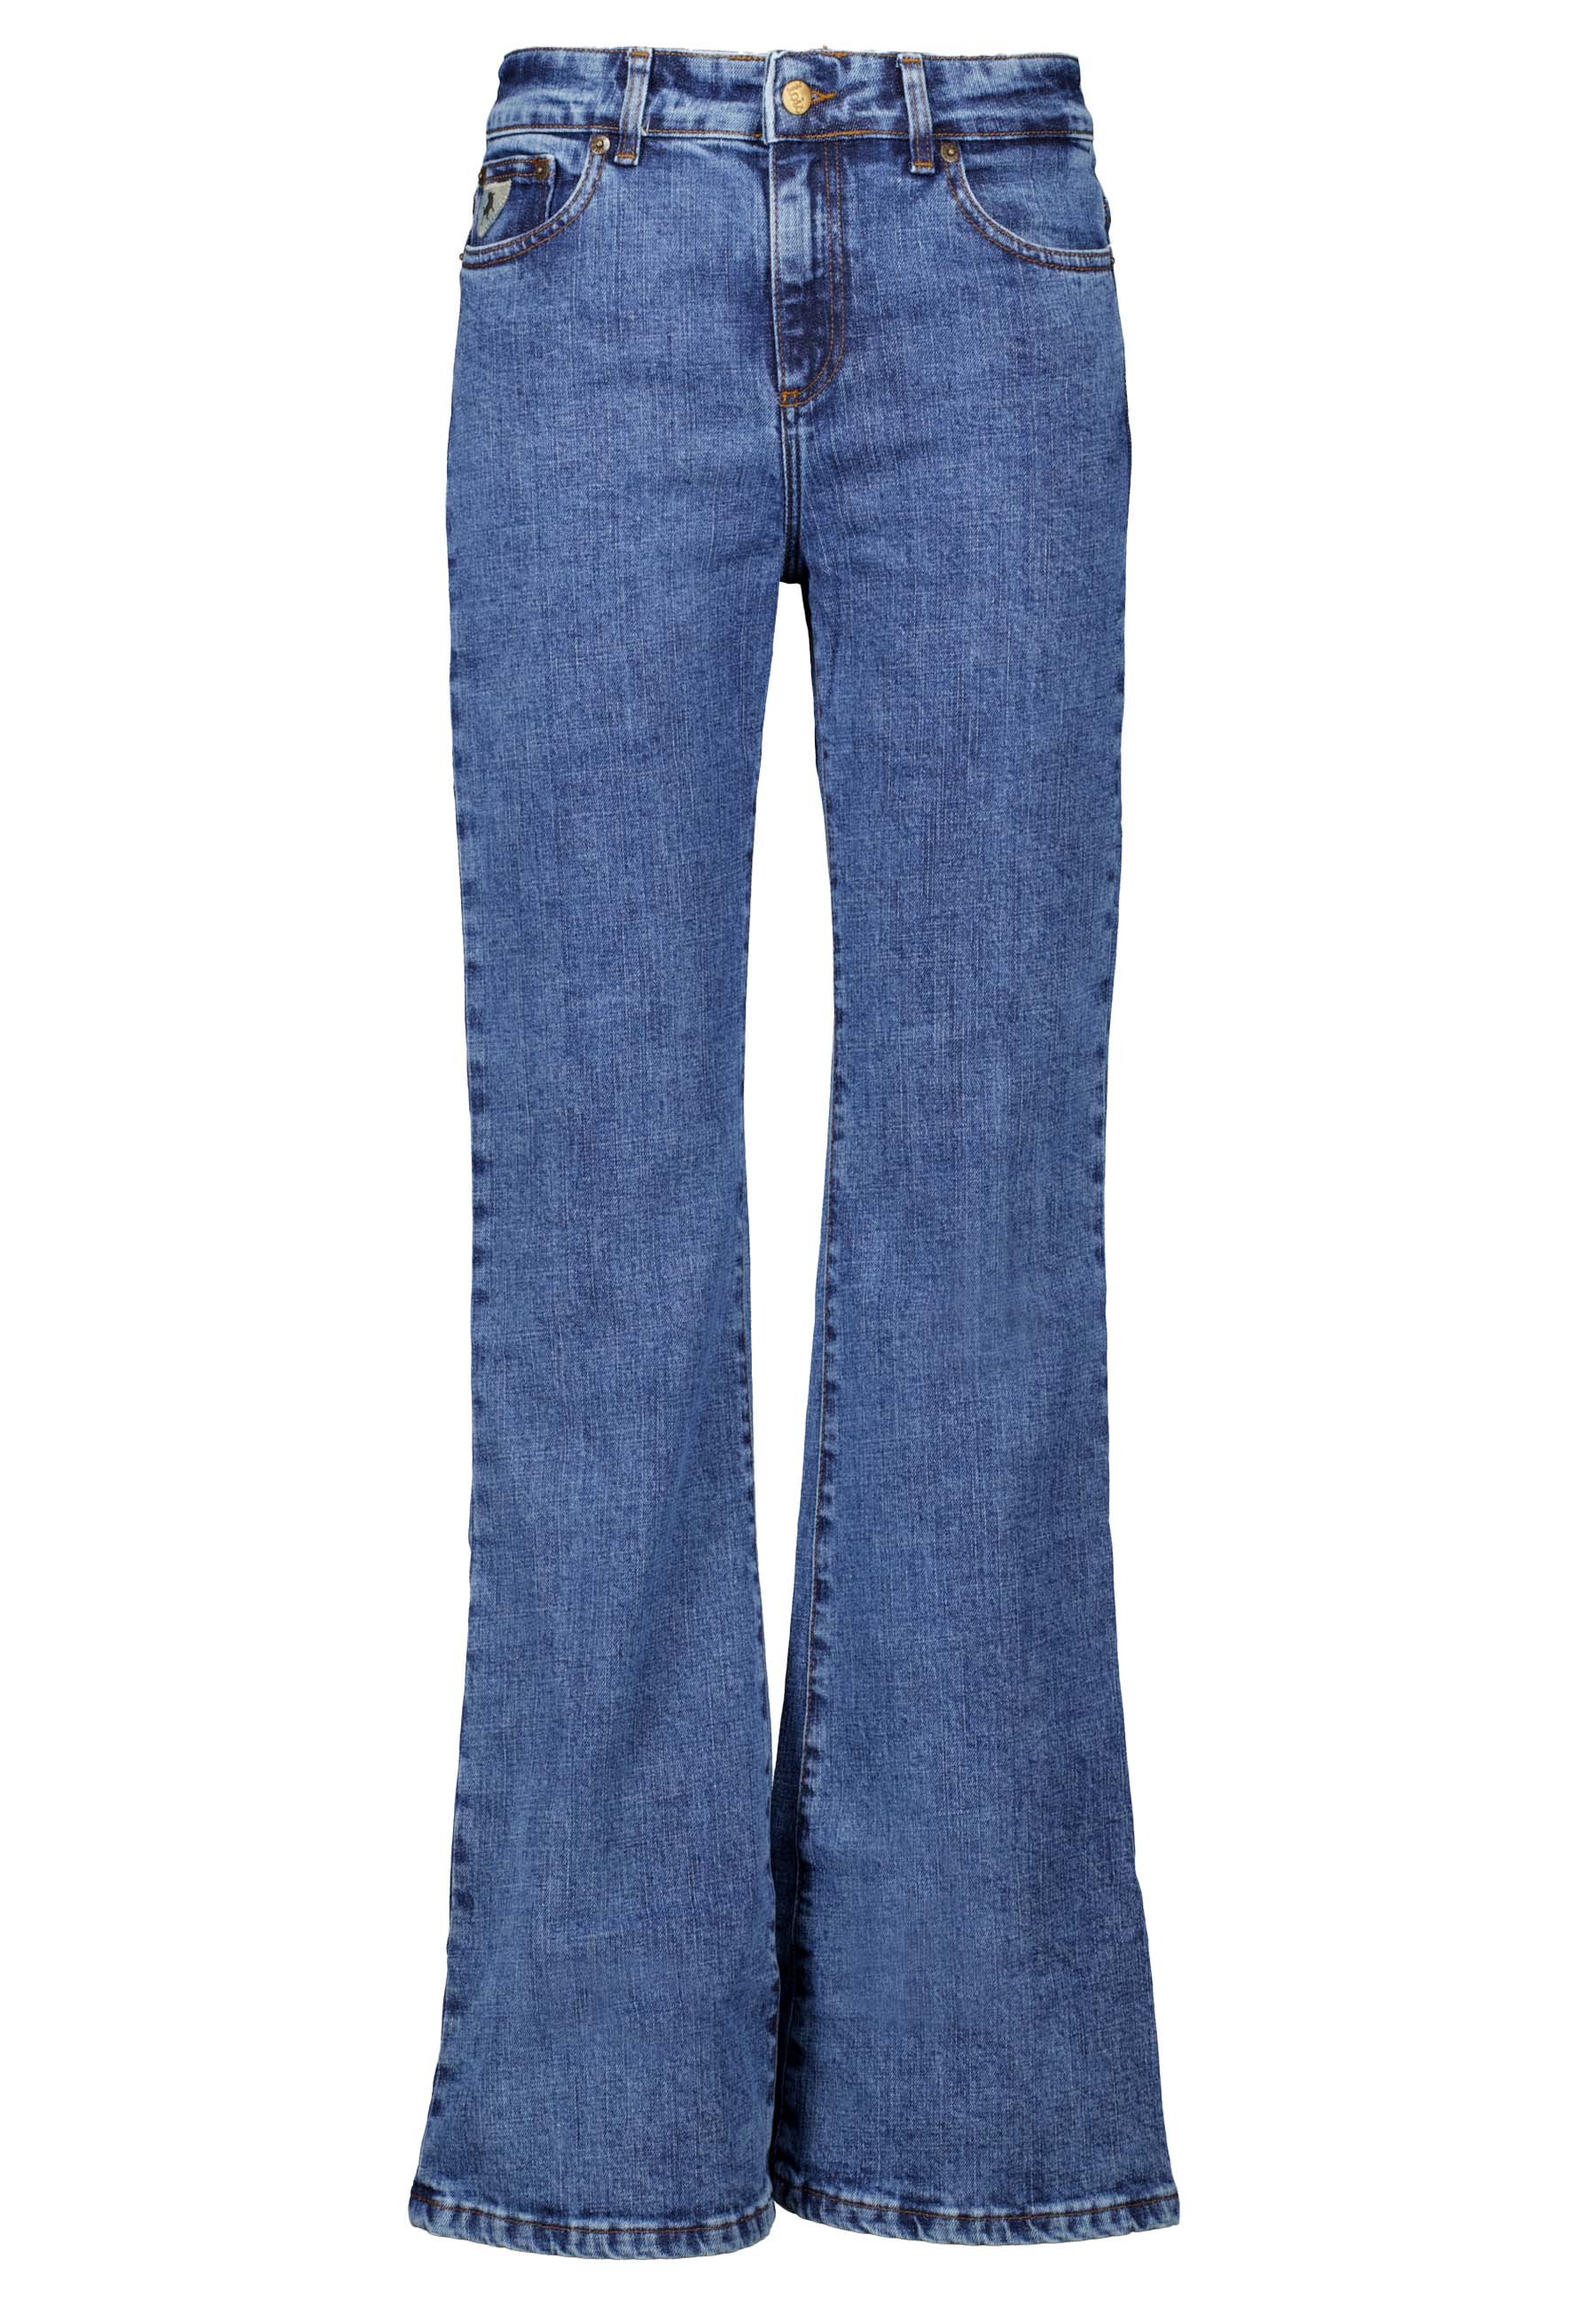 Lois Raval comfy jeans blauw Dames maat 29/32